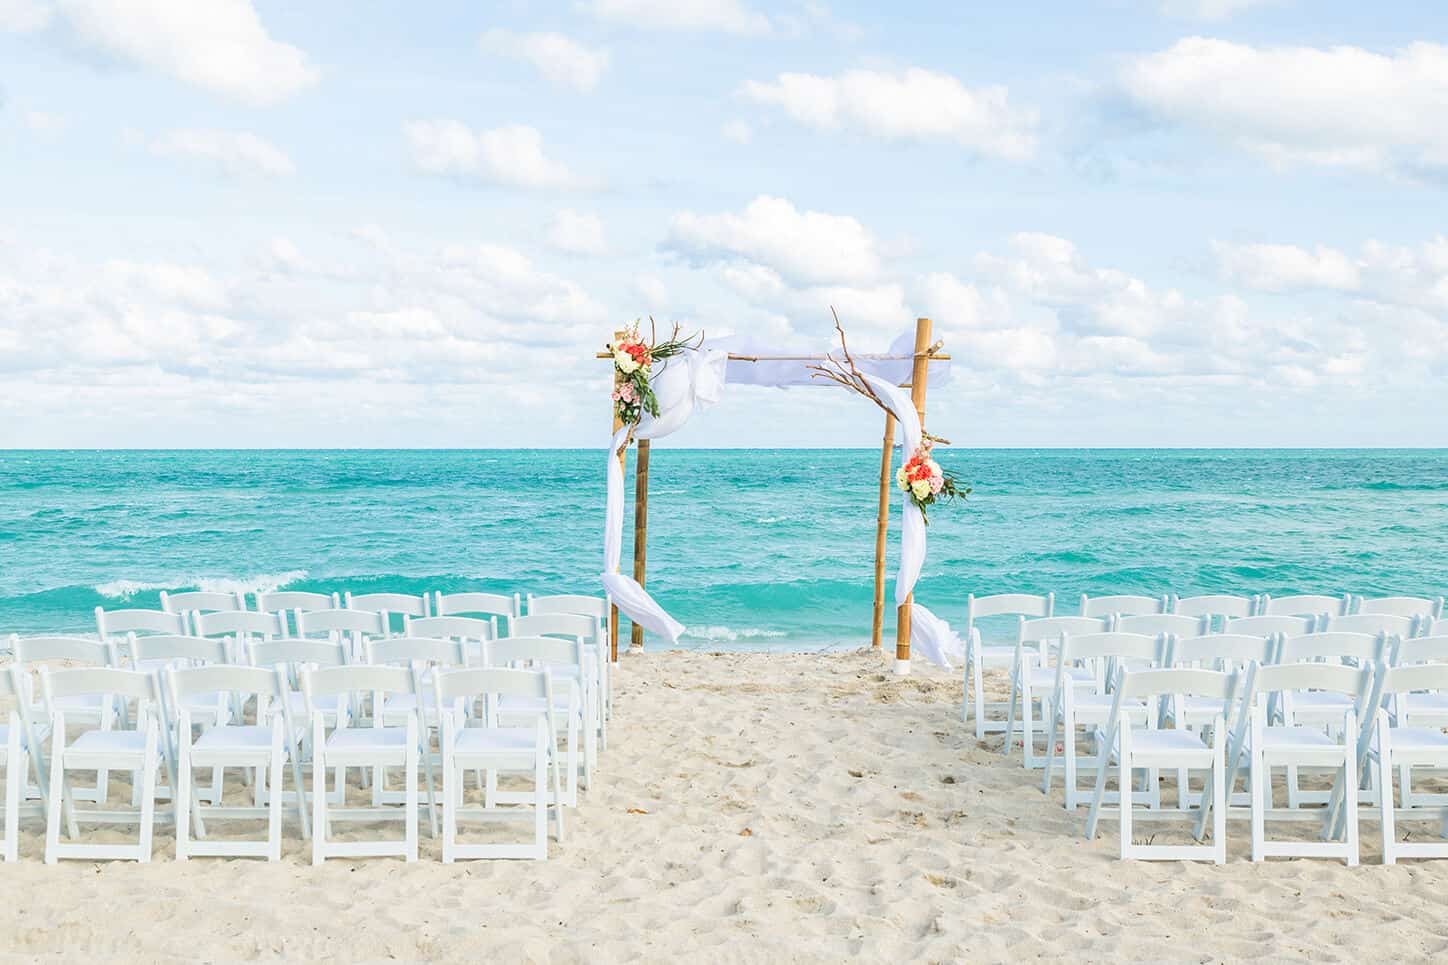 Destination weddings post featured photo | by Miami Wedding Photographer